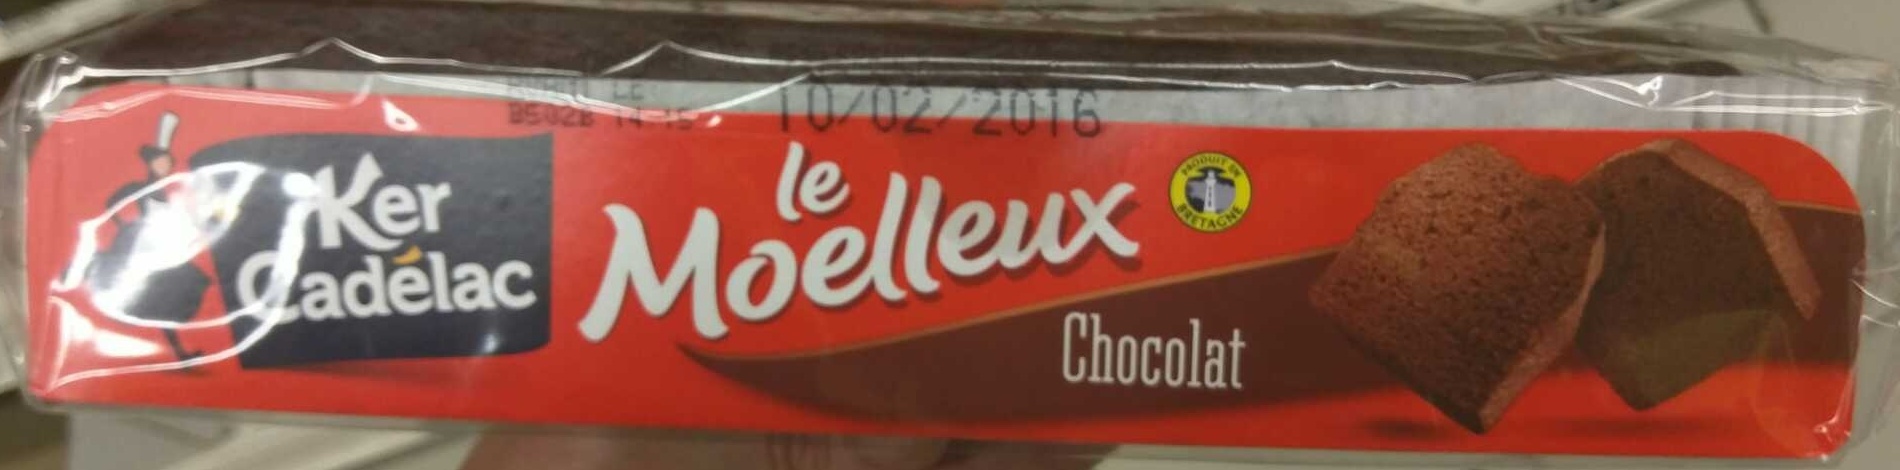 Le Moelleux Chocolat - Producto - fr